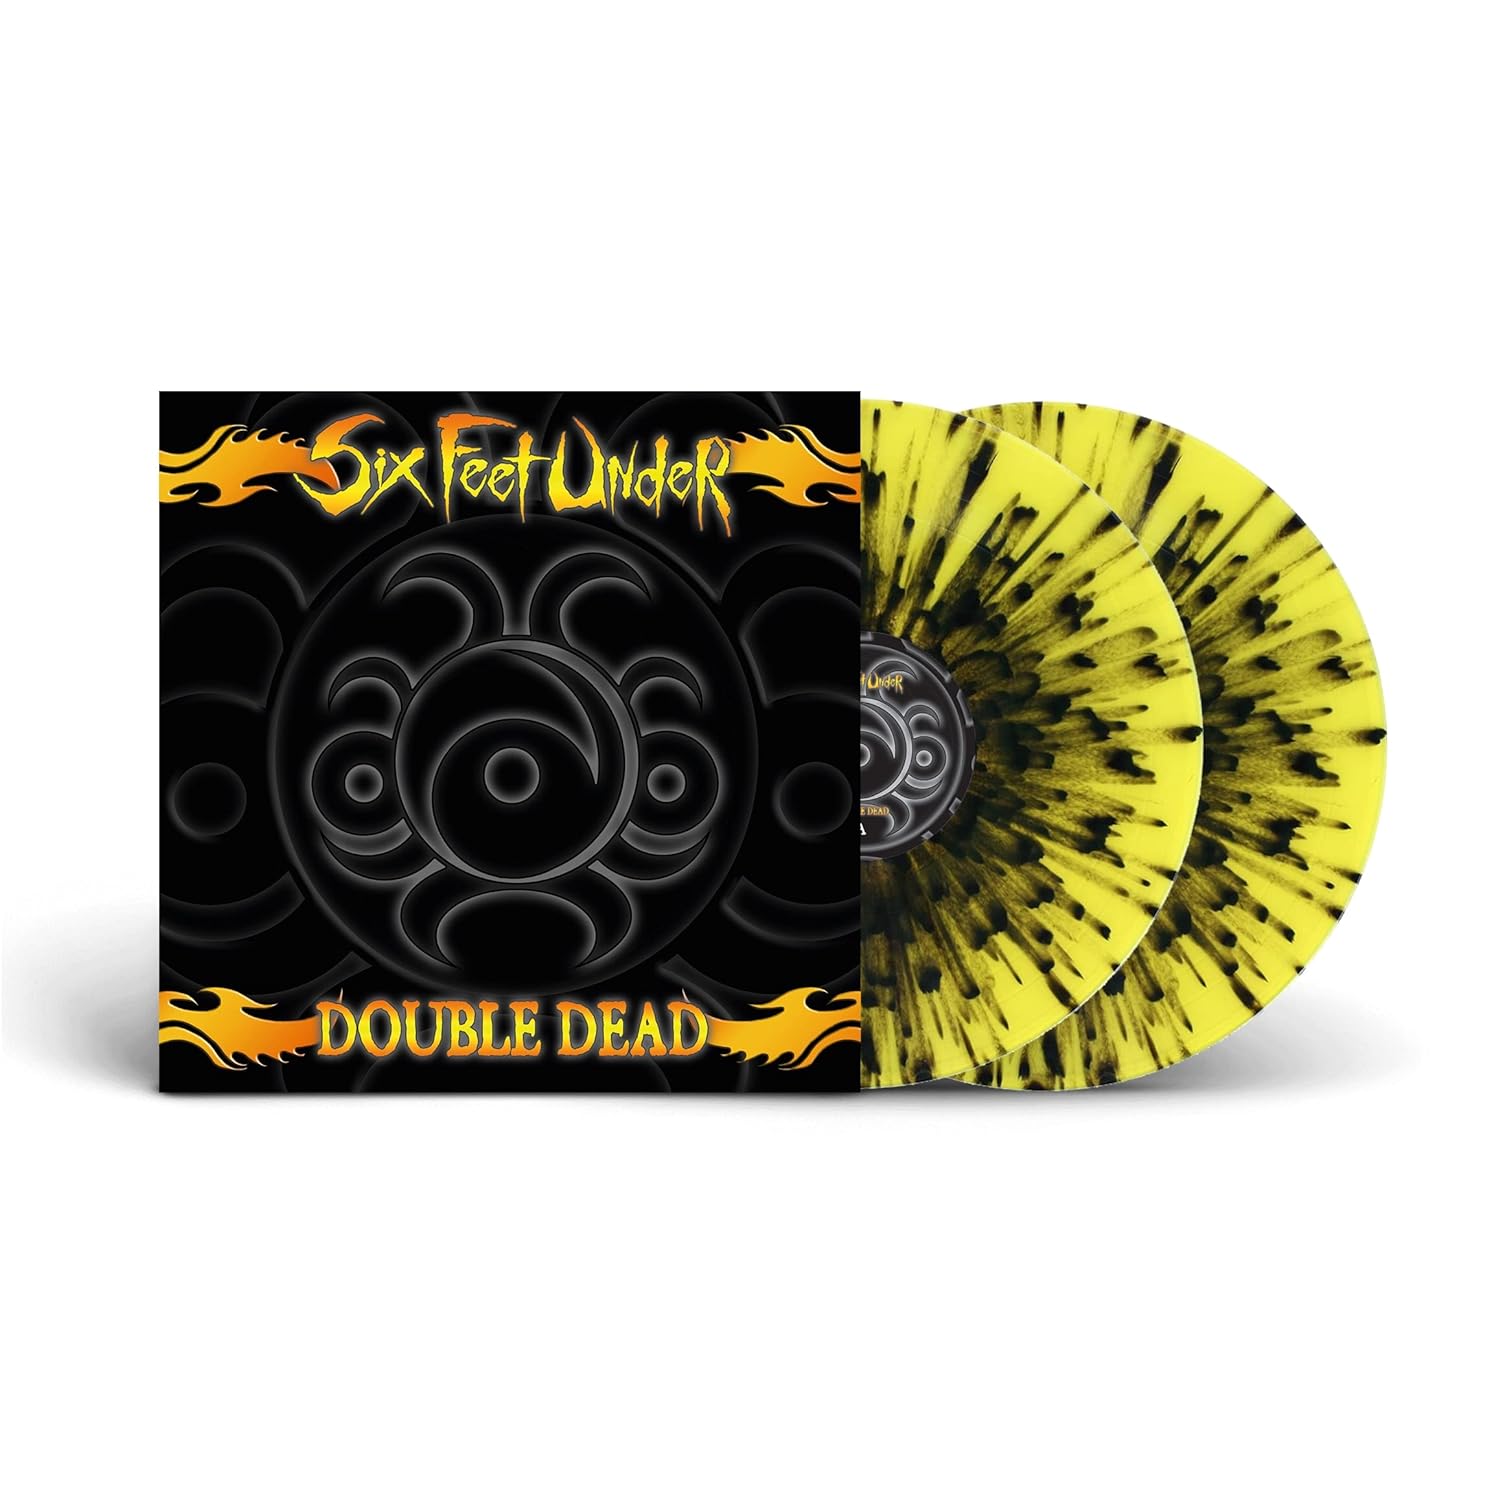 SIX FEET UNDER – DOUBLE DEAD yellow/black splatter vinyl LP2